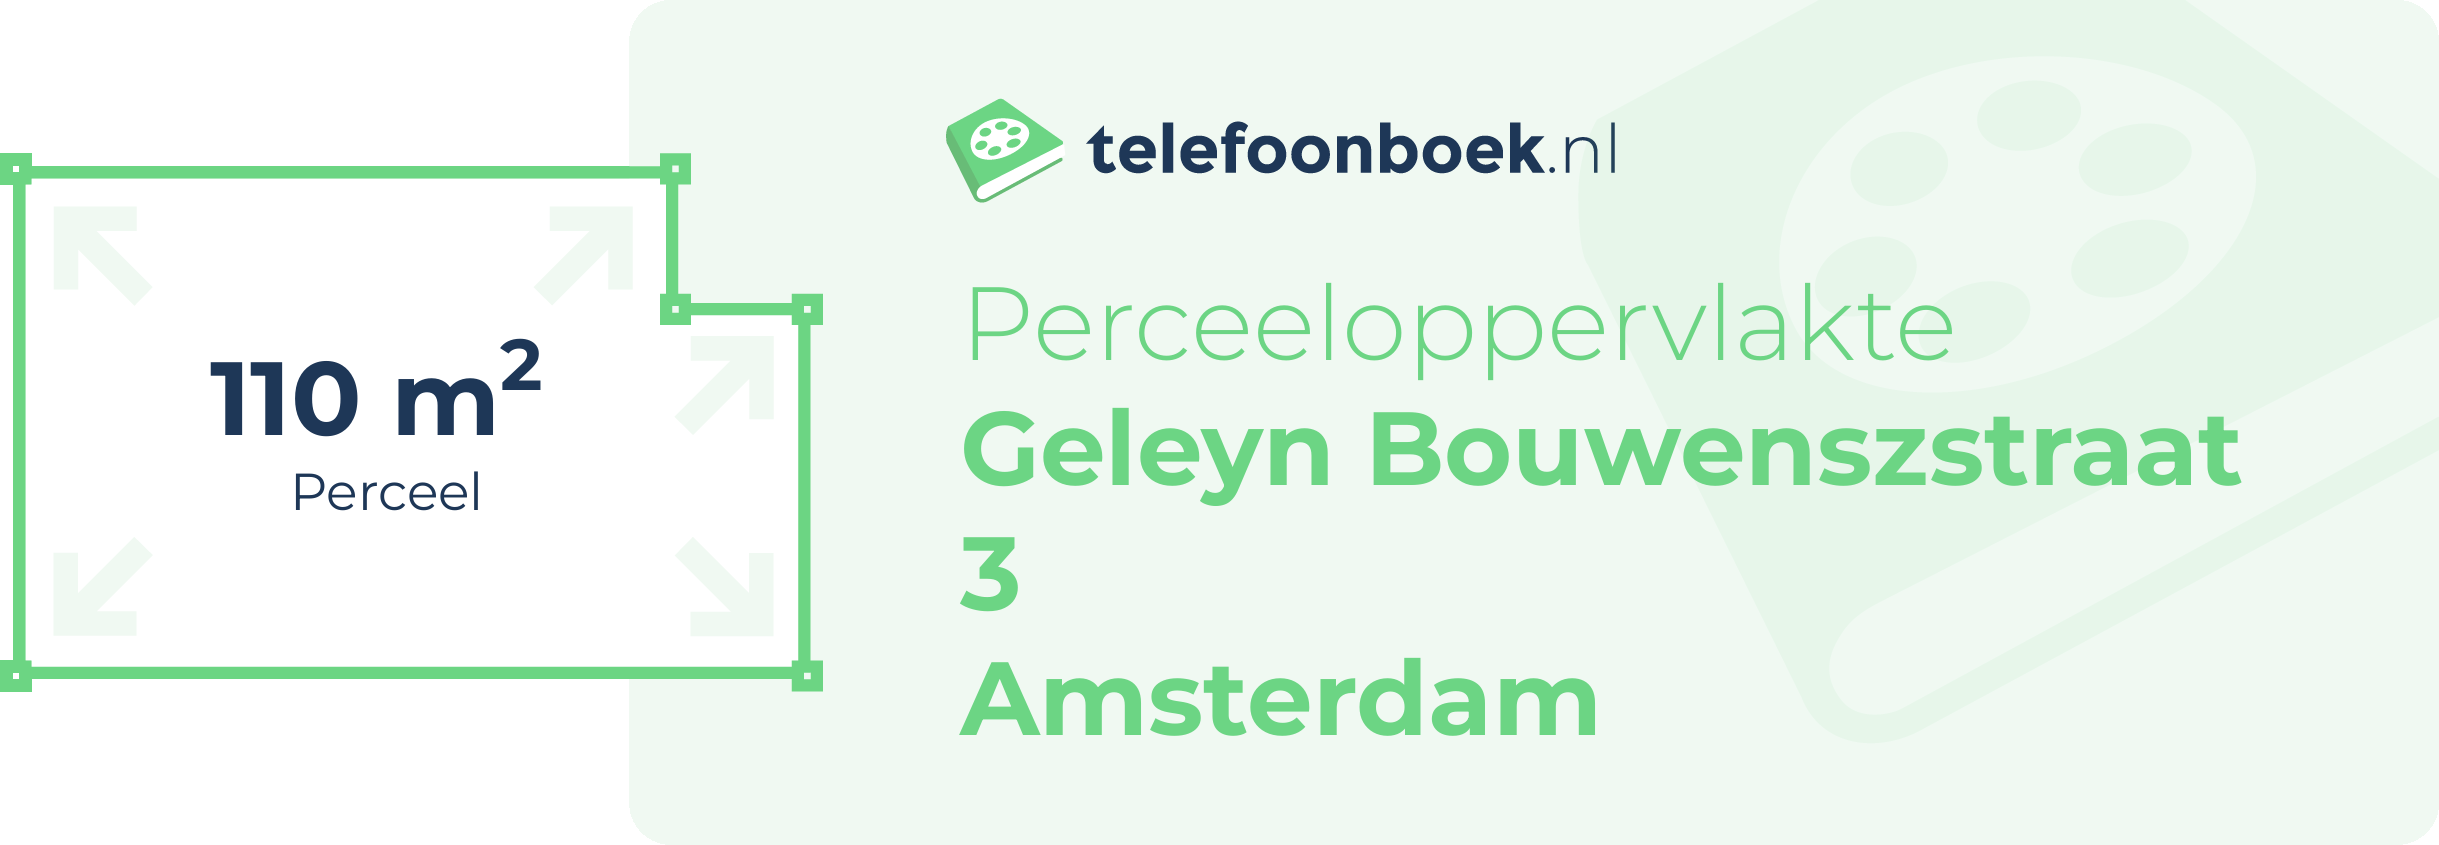 Perceeloppervlakte Geleyn Bouwenszstraat 3 Amsterdam